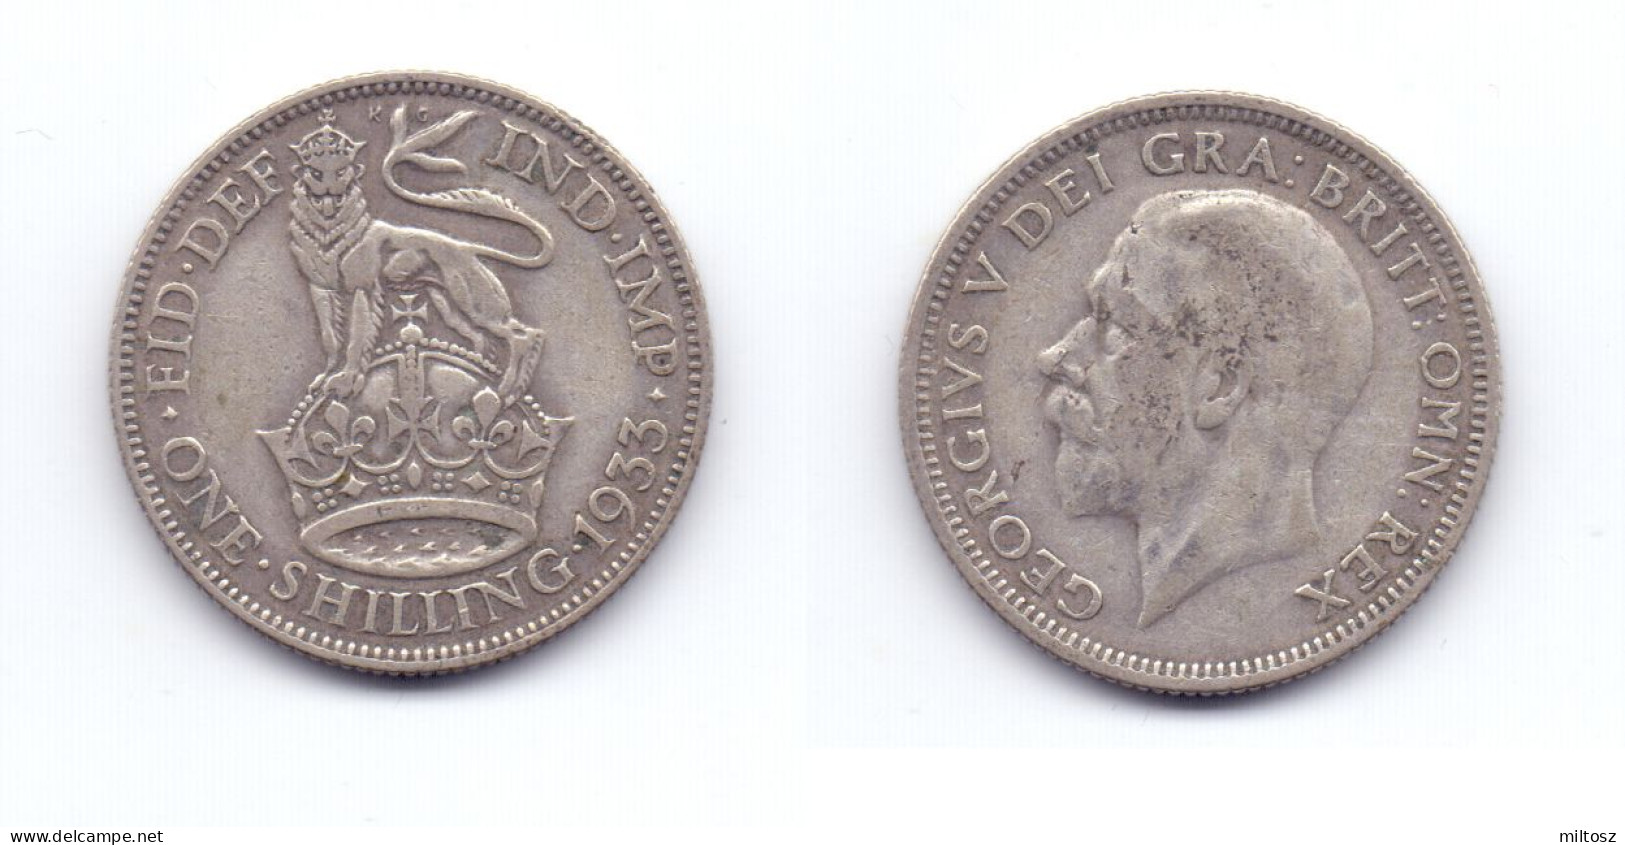 Great Britain 1 Shilling 1933 - I. 1 Shilling